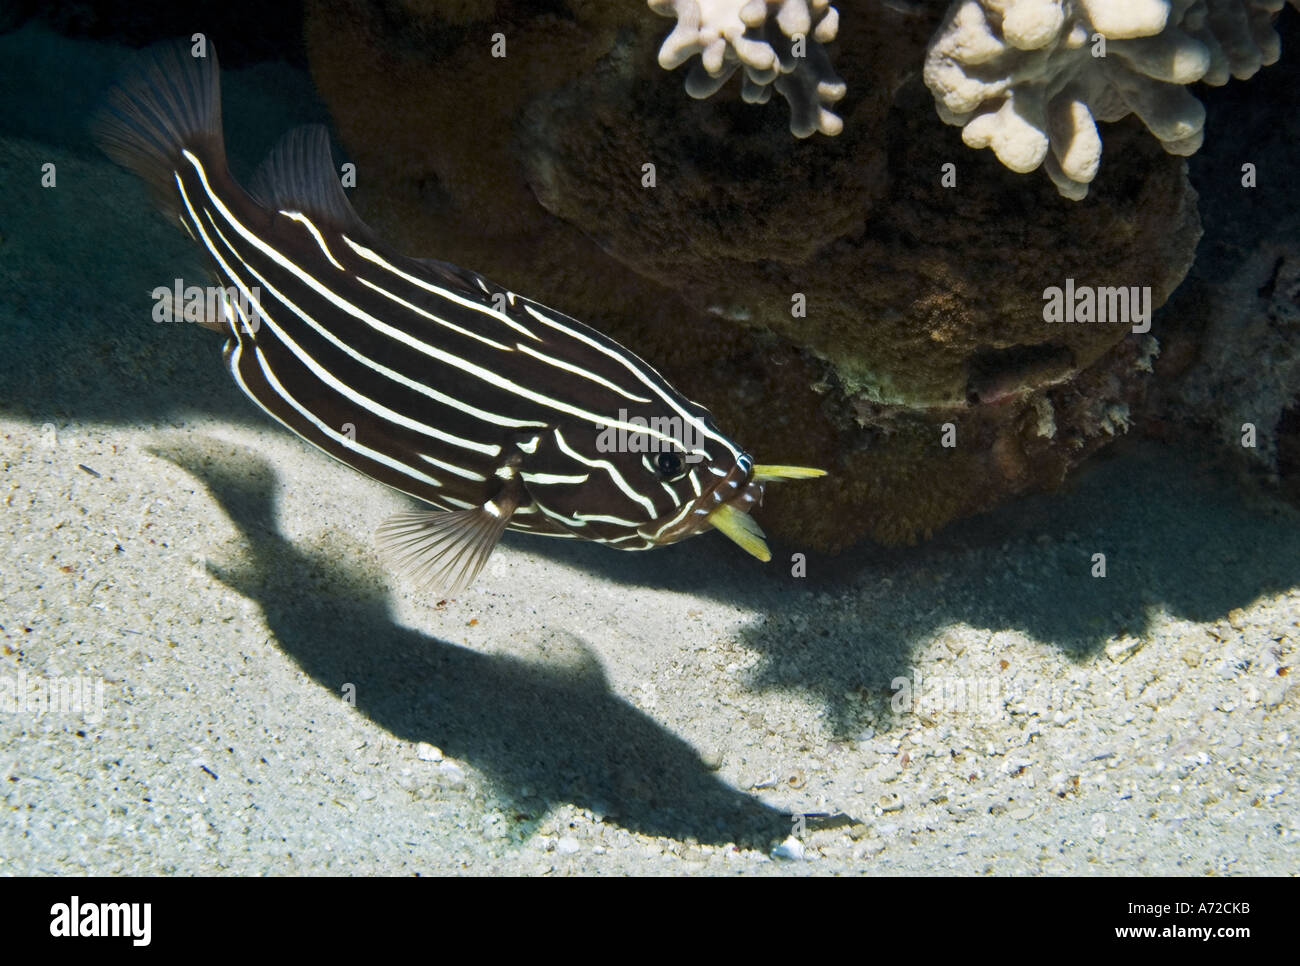 sixstripe soapfish eating a small fish Stock Photo